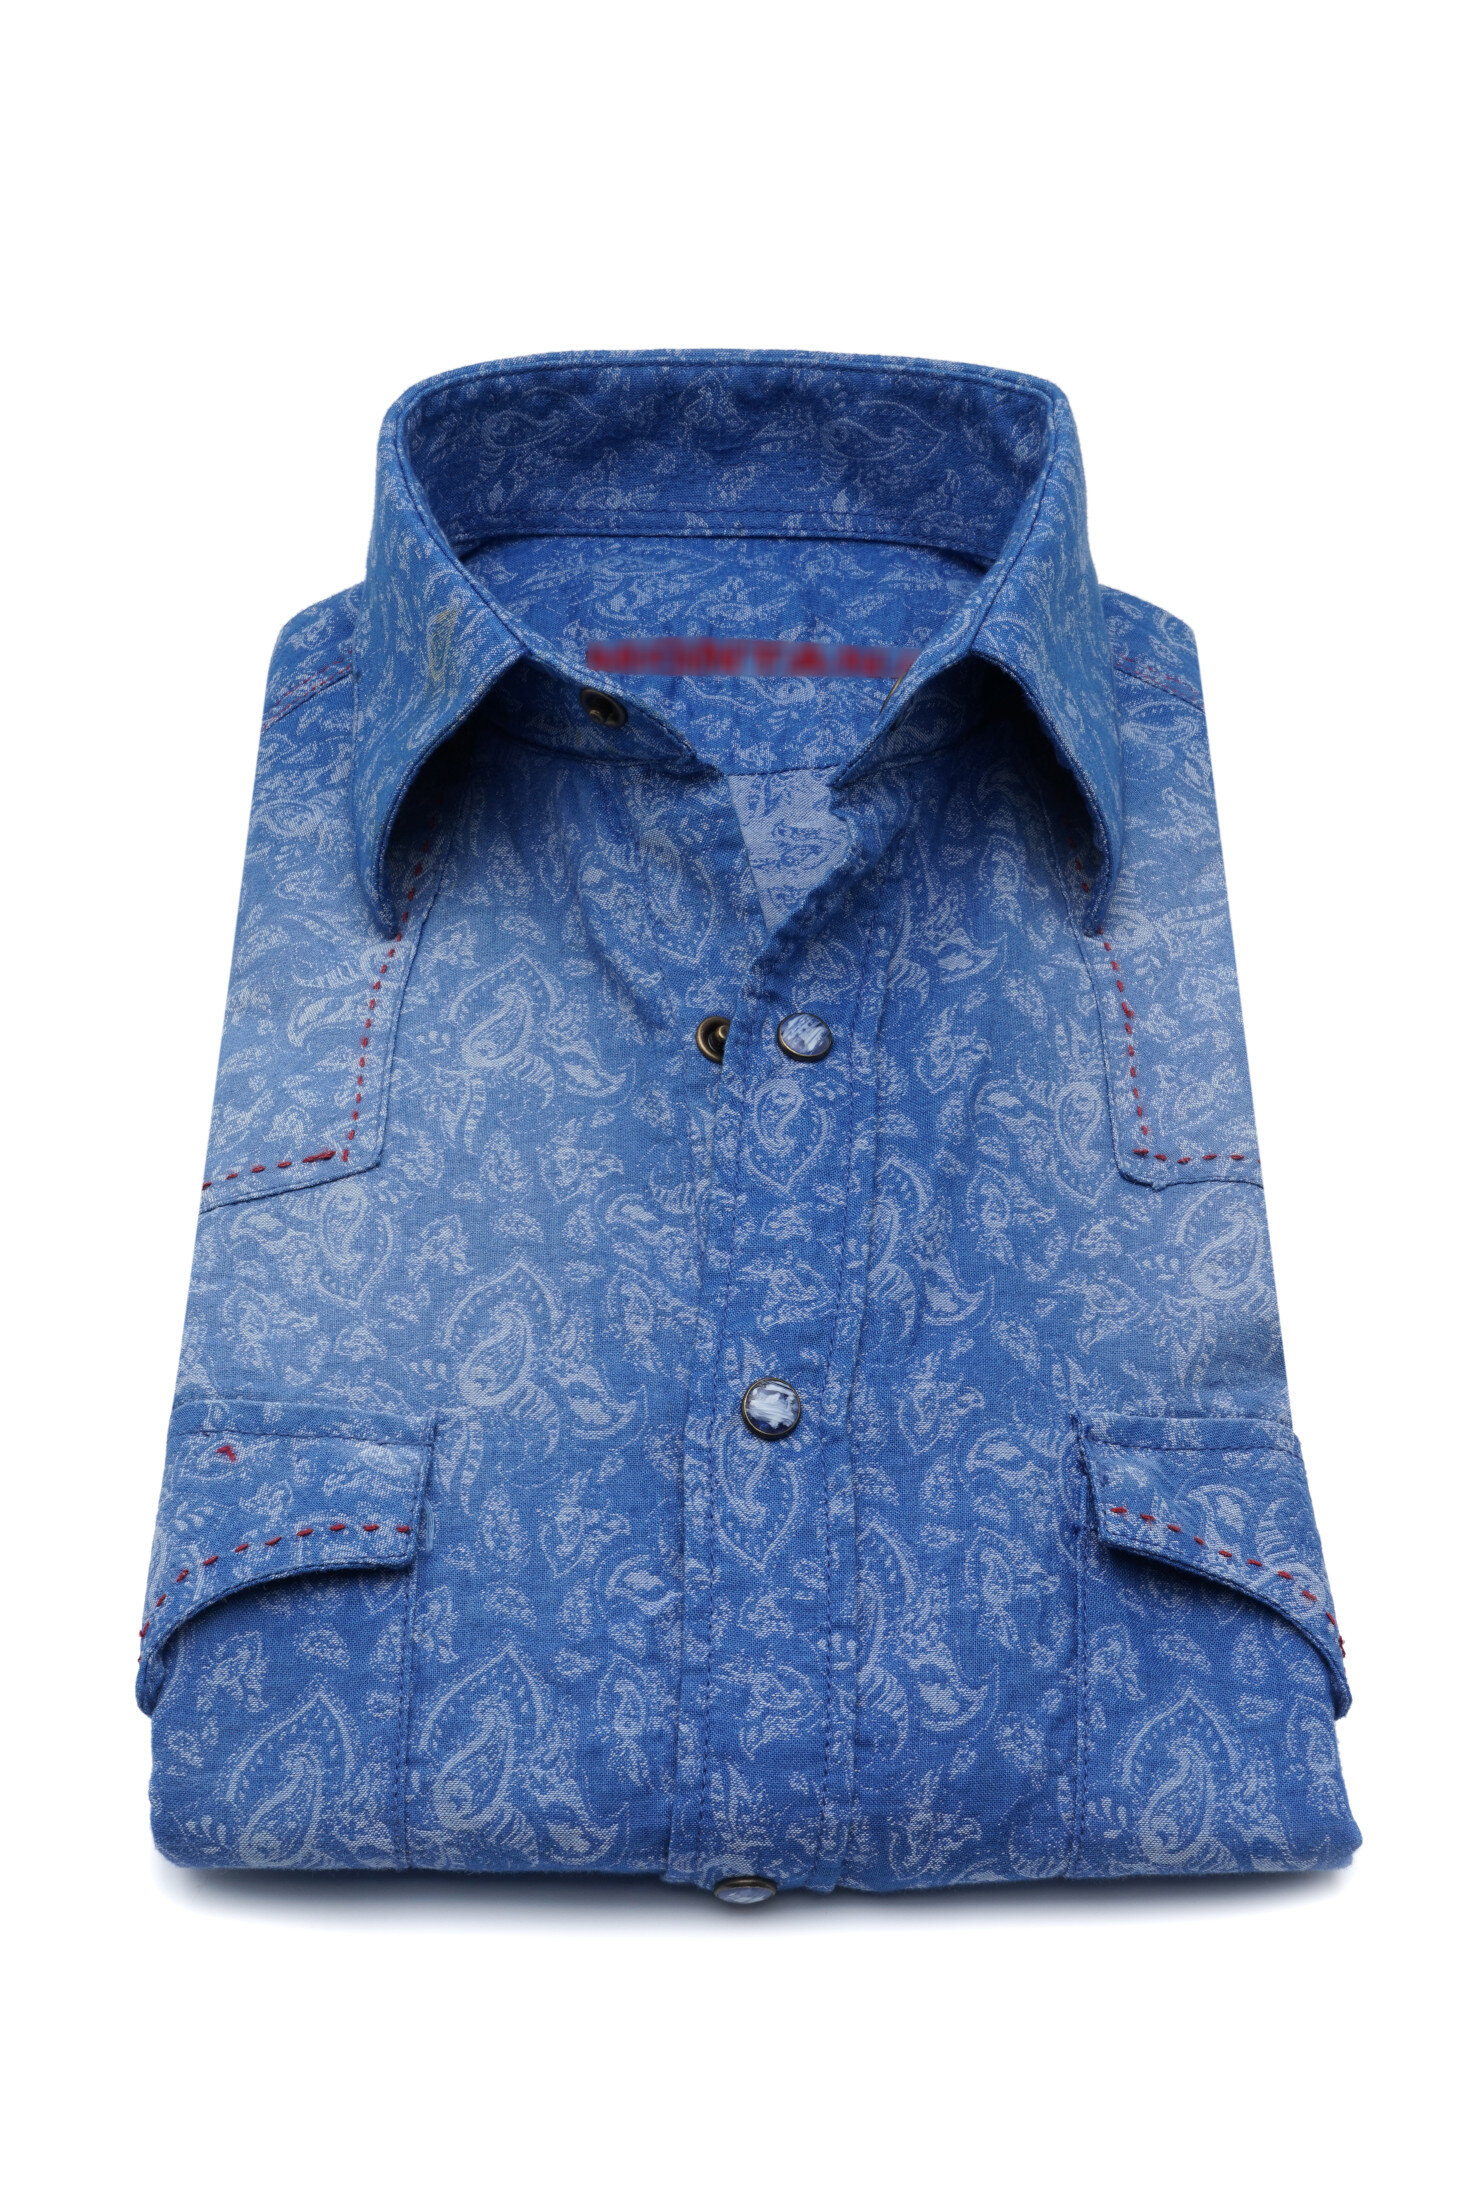 280 JA004 | Jacquard Shirts | Private Label Shirt Manufacturer | Turkey: % 100 Cotton - Paisley Design - Woven - Western Yoke - Western - Snap Buttons - Double Pockets - Flaps - Stop Stitch - Contrast Stitch